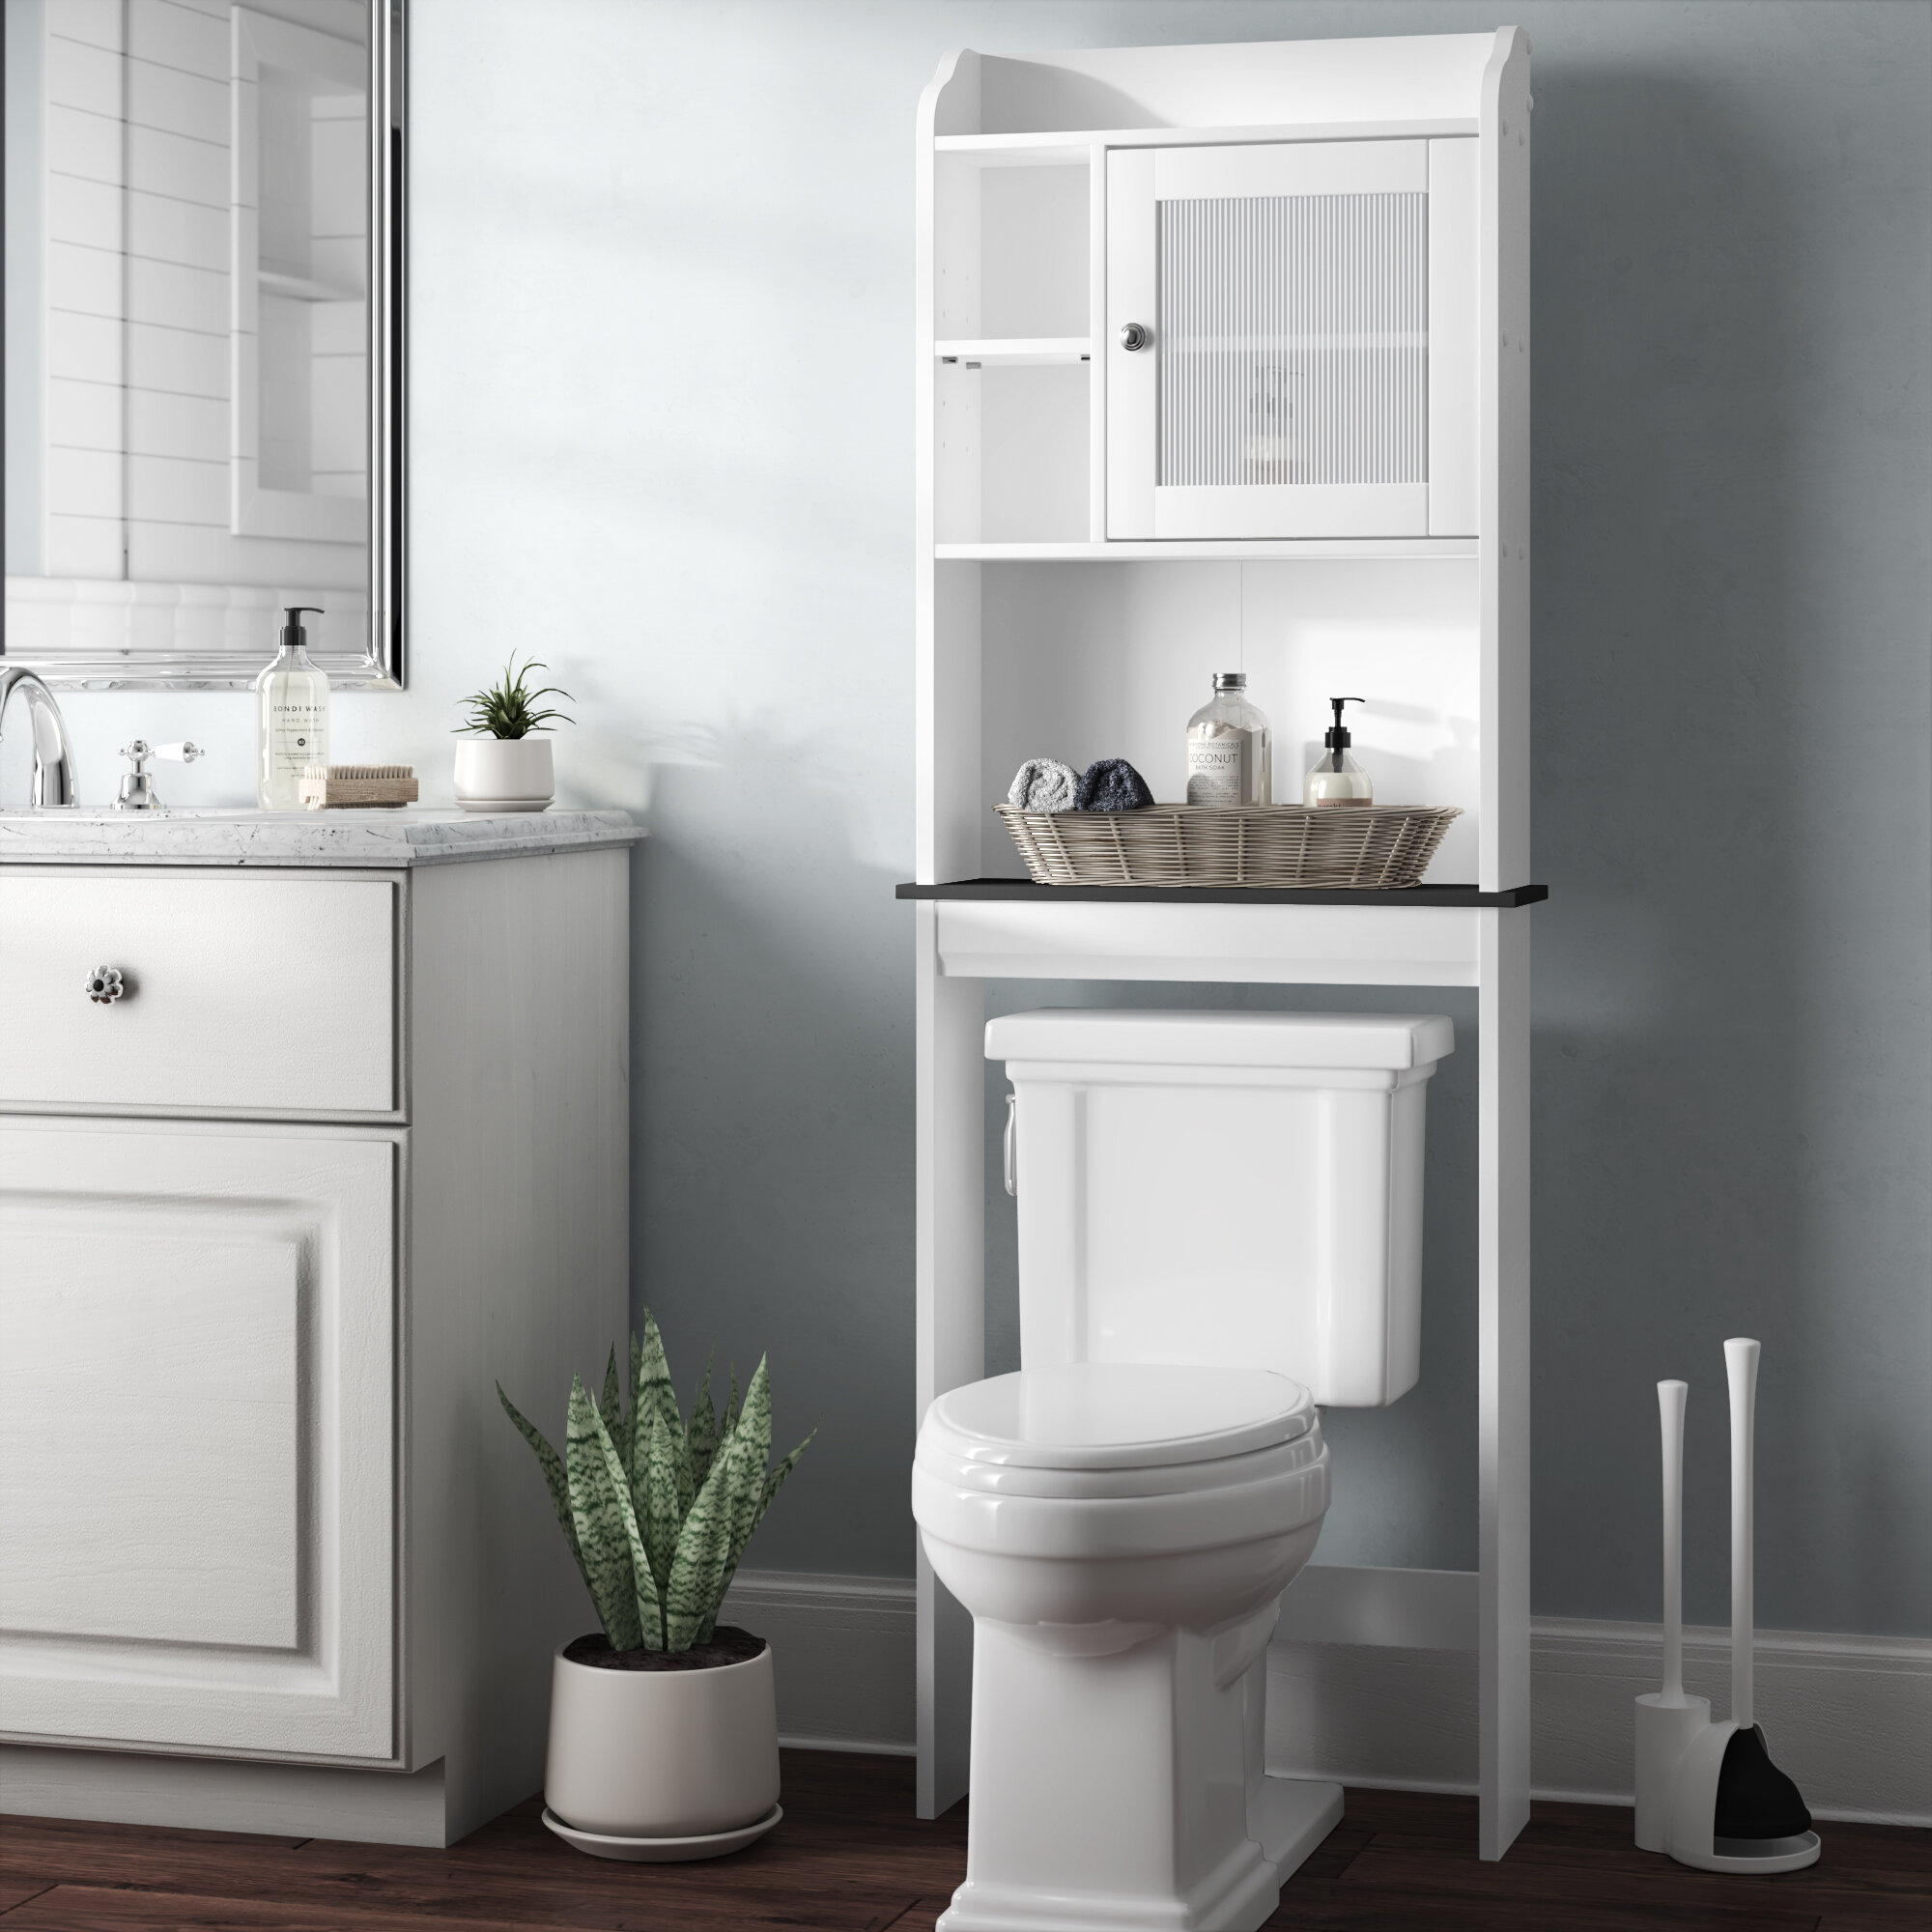 New White Wooden Furniture Bathroom Sink Cabinet Cupboard Shelving Storage Unit 